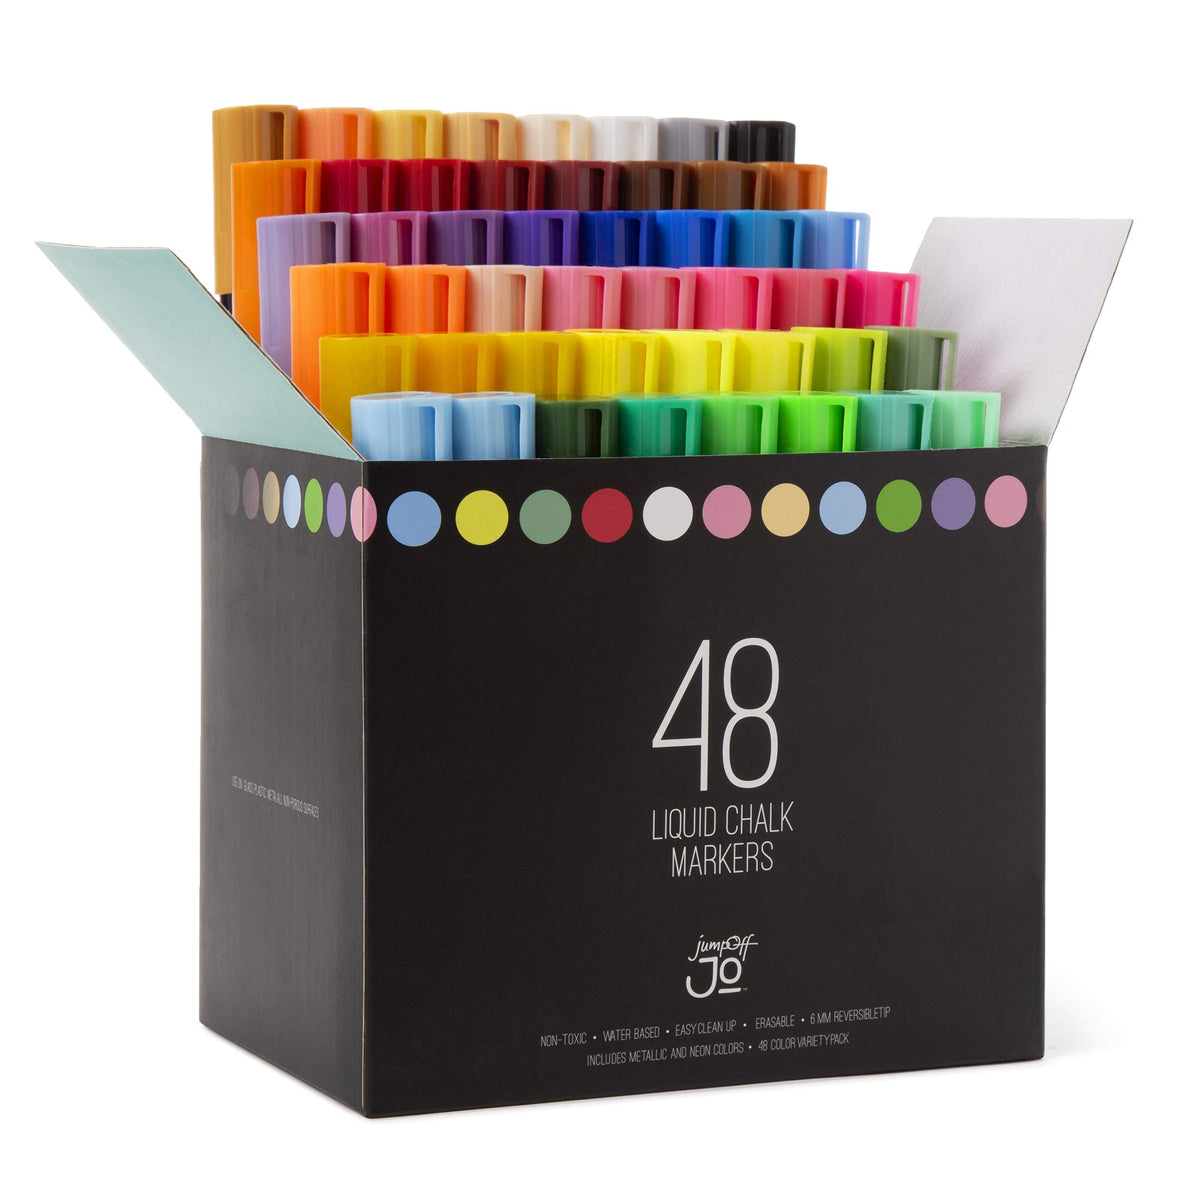 MMFB Arts & Crafts Chalk Markers - Pack of 33 Liquid Chalk Paint